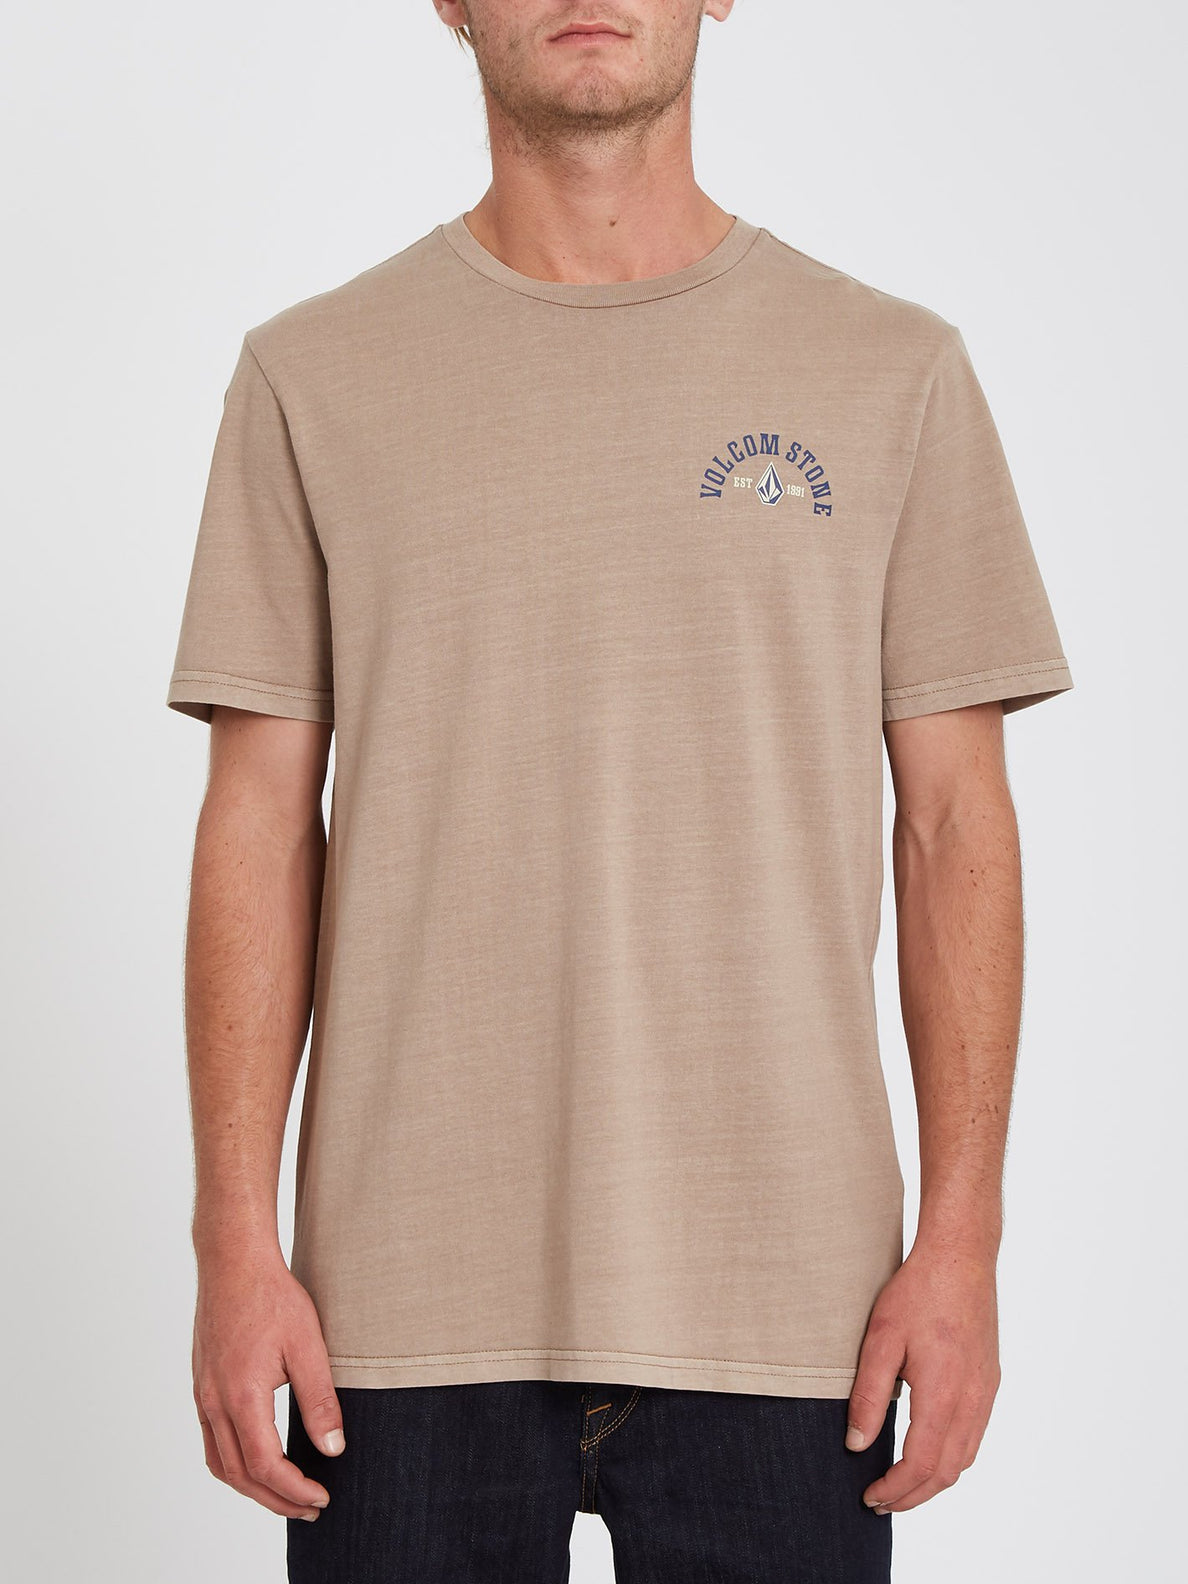 Ranchamigo T-shirt - DARK TAUPE (A5232102_DTP) [F]